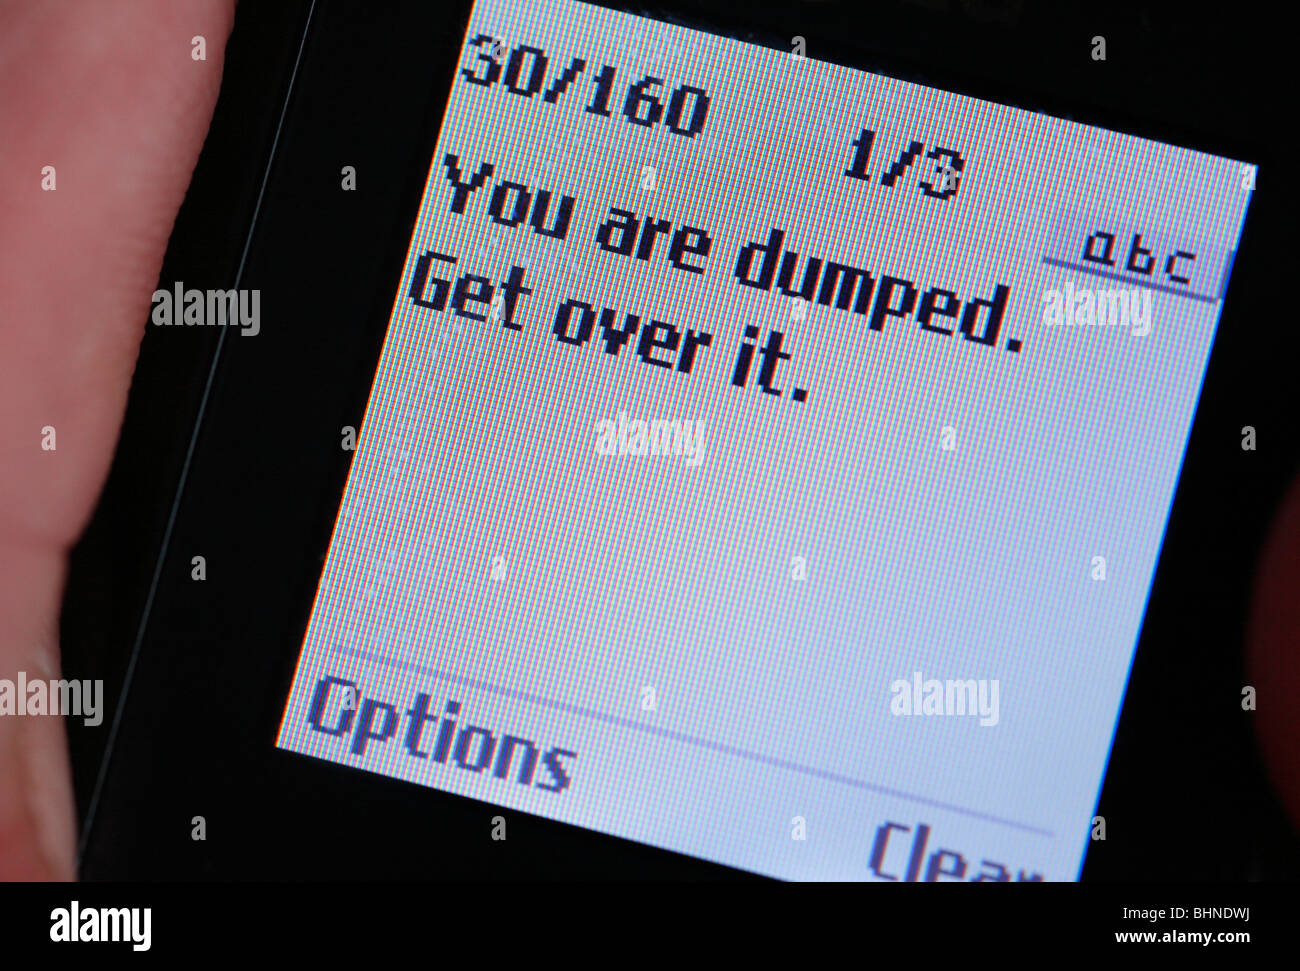 Mensaje de texto en un teléfono móvil que dice "que son objeto de dumping. Get Over It". Foto de stock